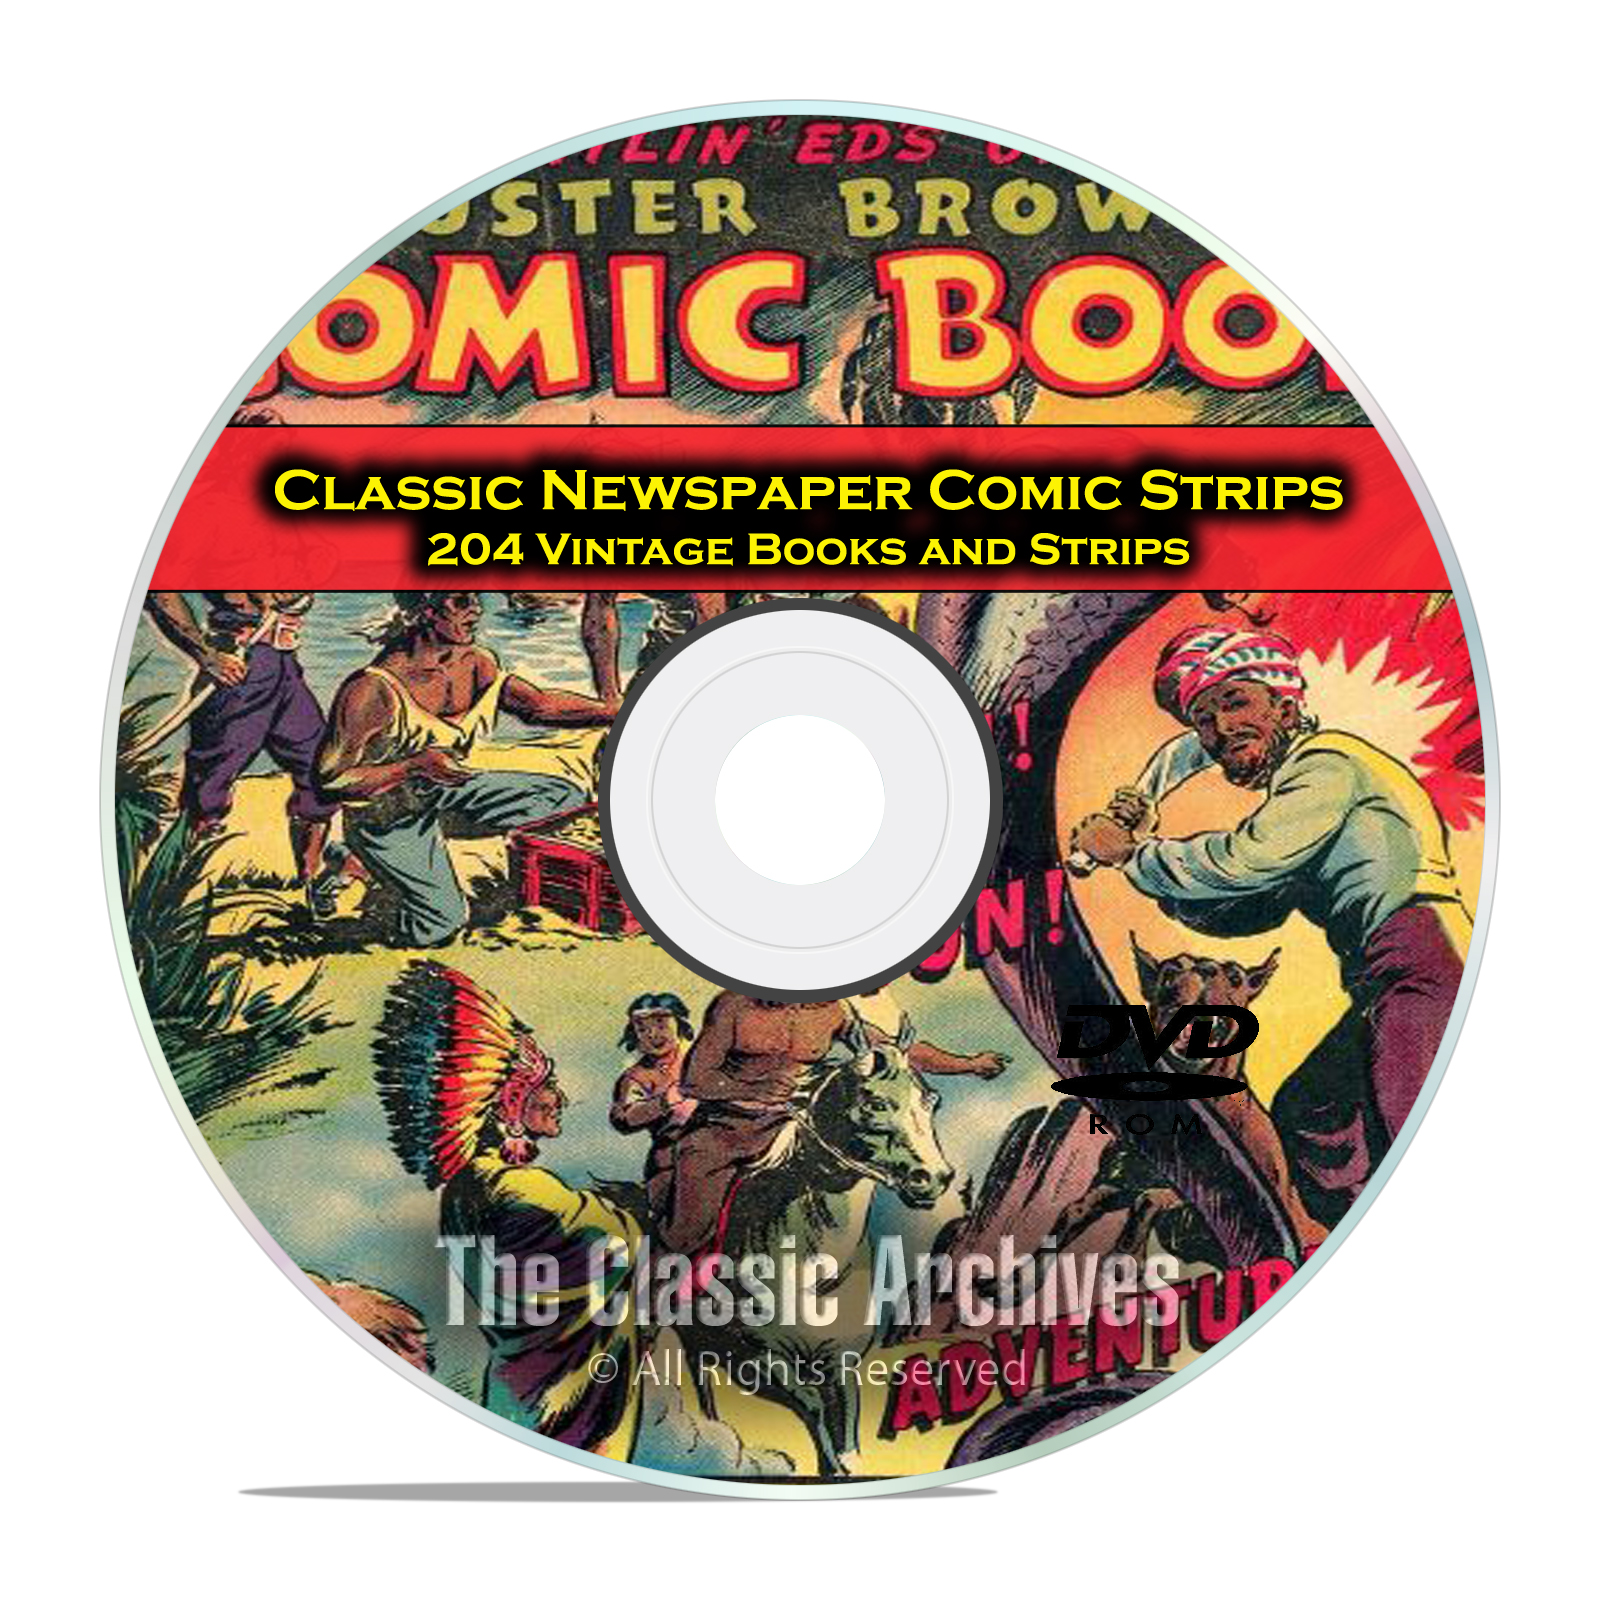 Classic Newspaper Comic Strips, Buster Brown, Nemo, Golden Age Comics DVD